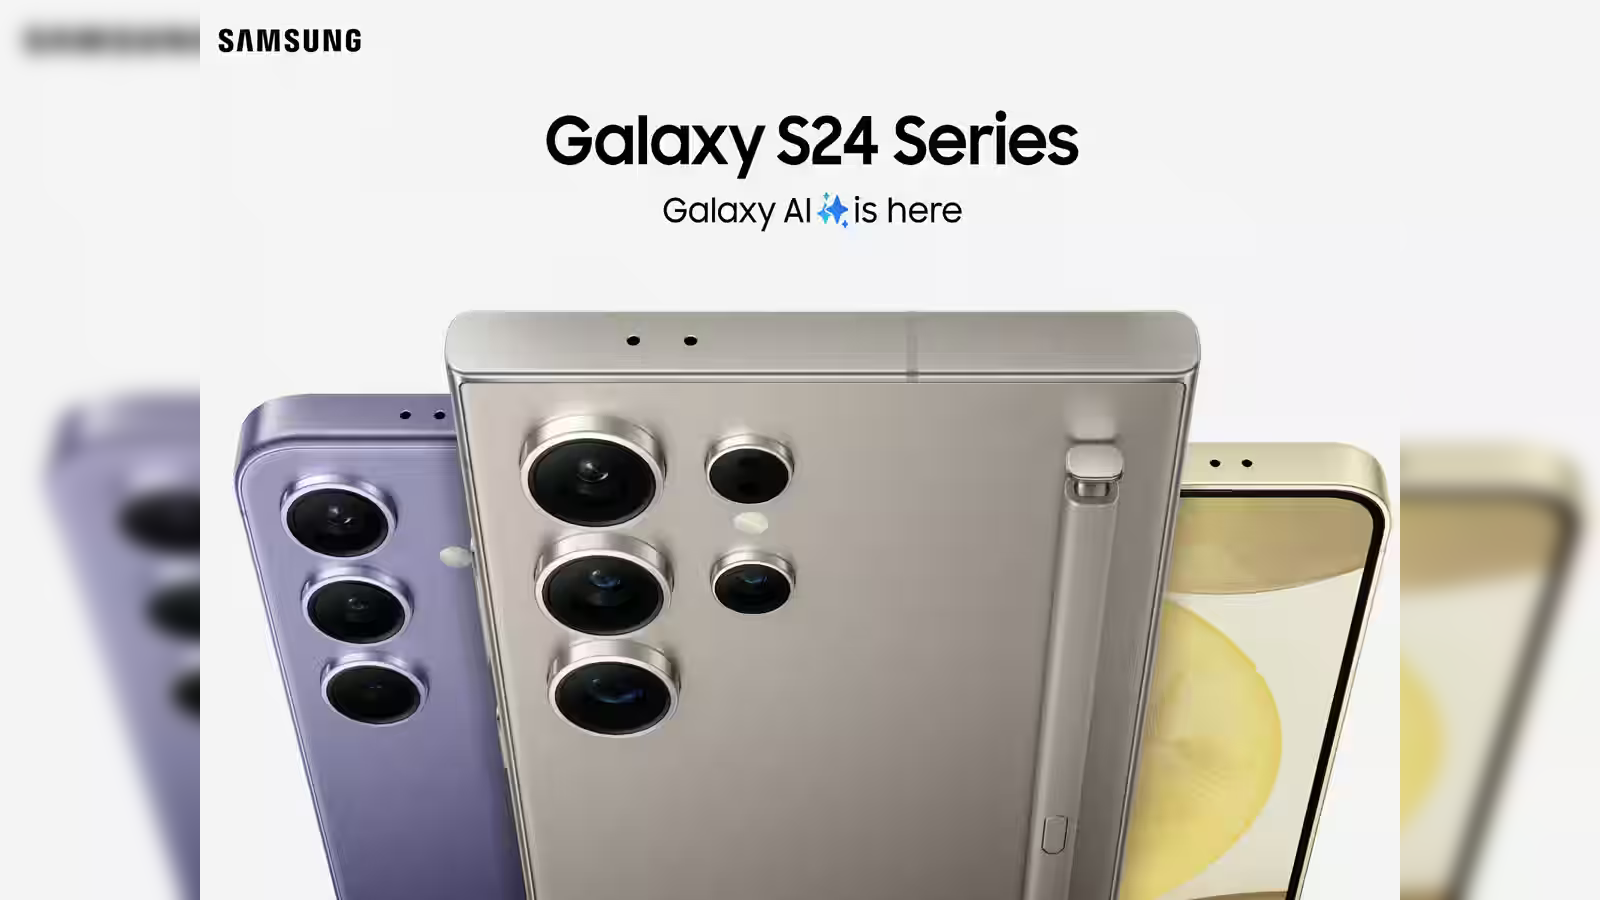 Samsung Galaxy S24, S24+, S24 Ultra India price announced